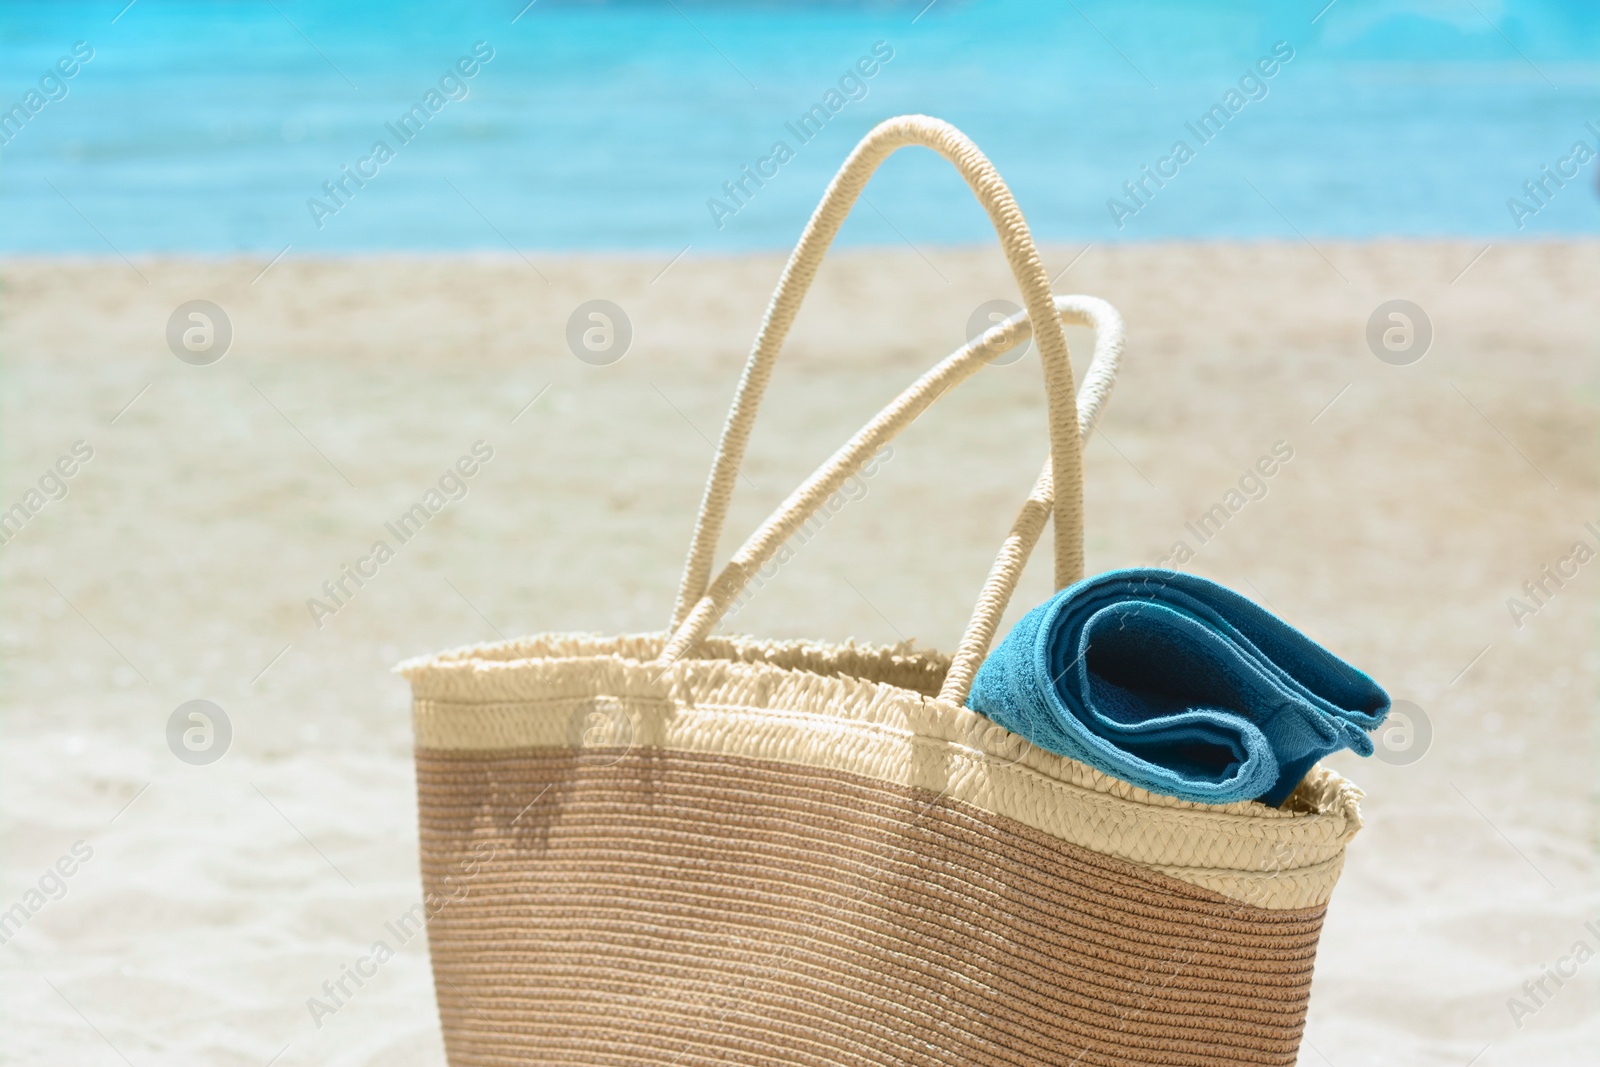 Photo of Soft blue towel in beach bag on sand near sea, closeup